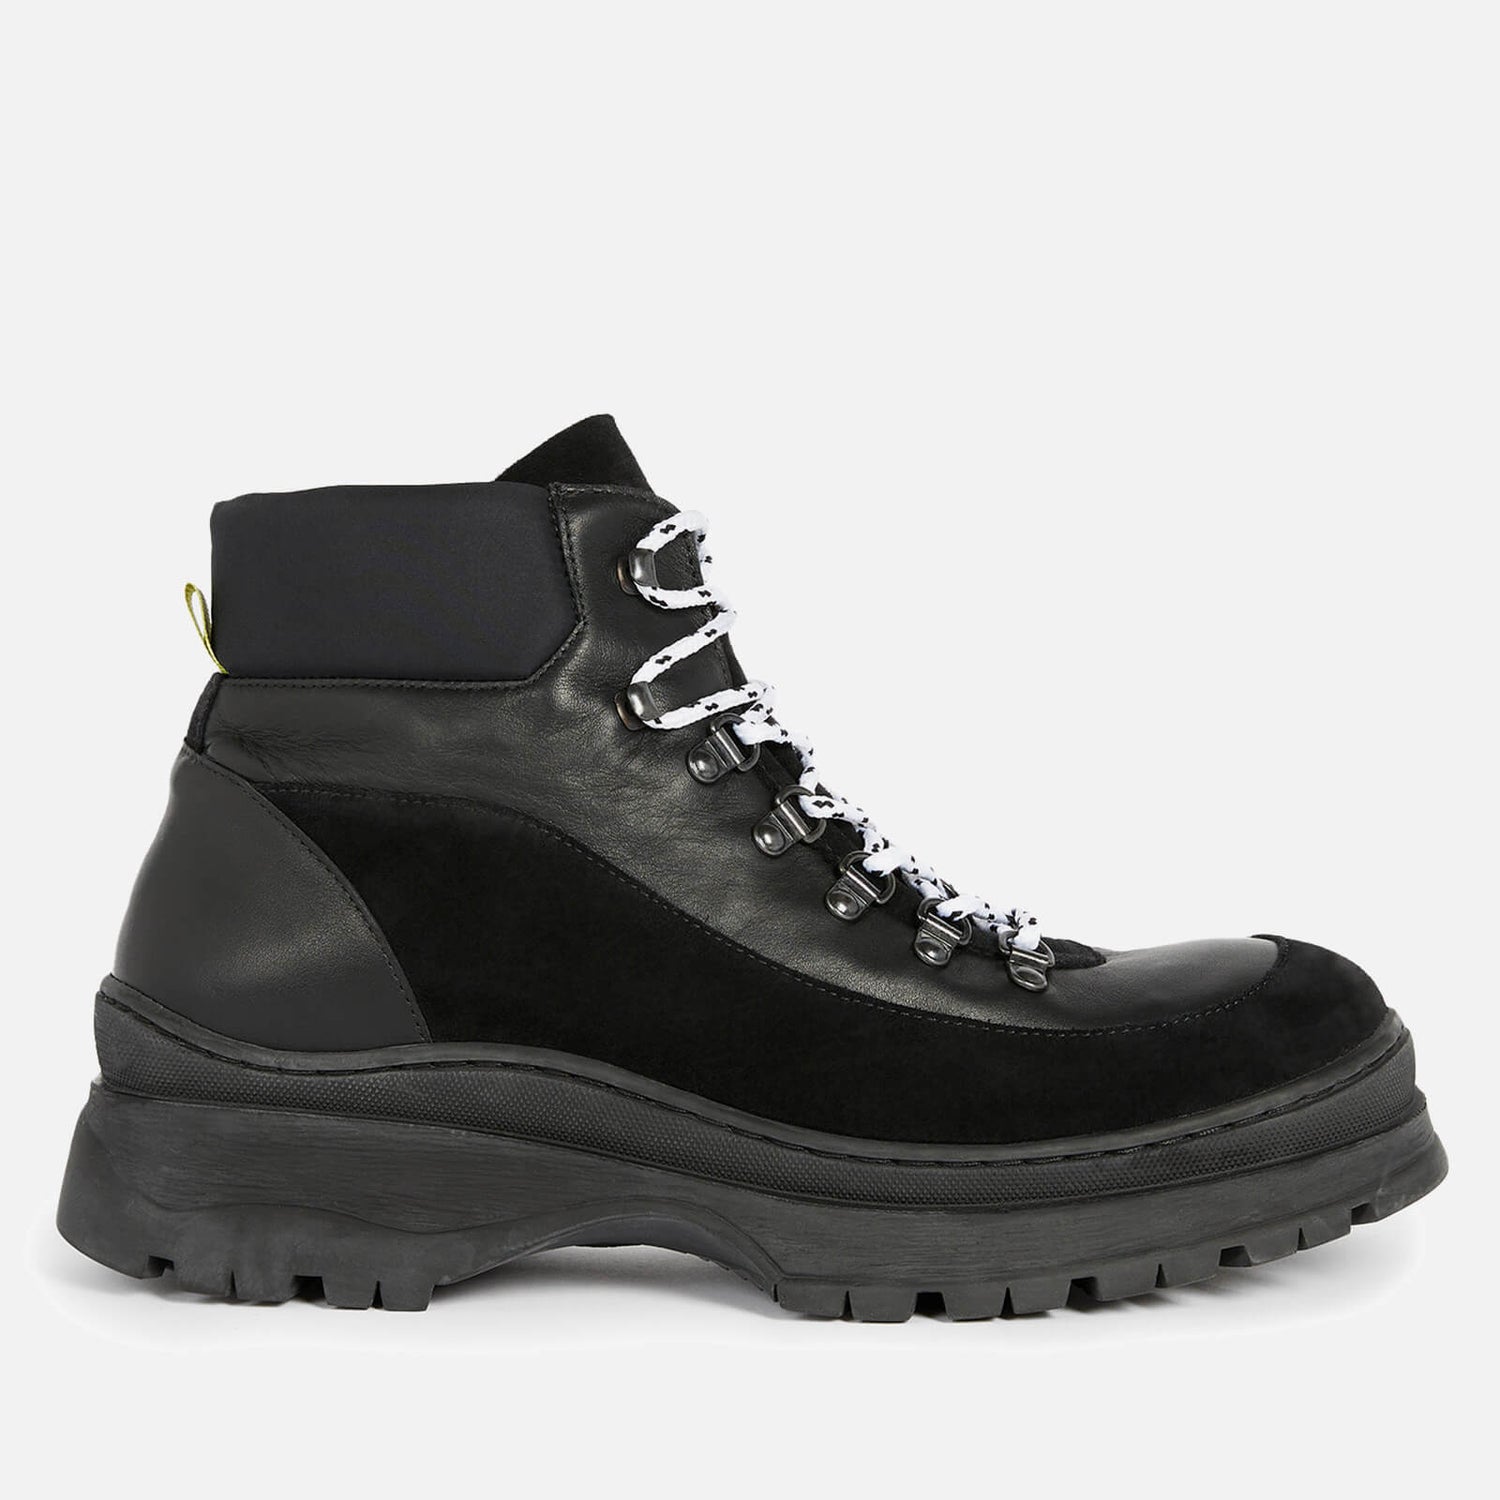 Ted Baker Men's Westonn Hiking Style Boots - Black - UK 7